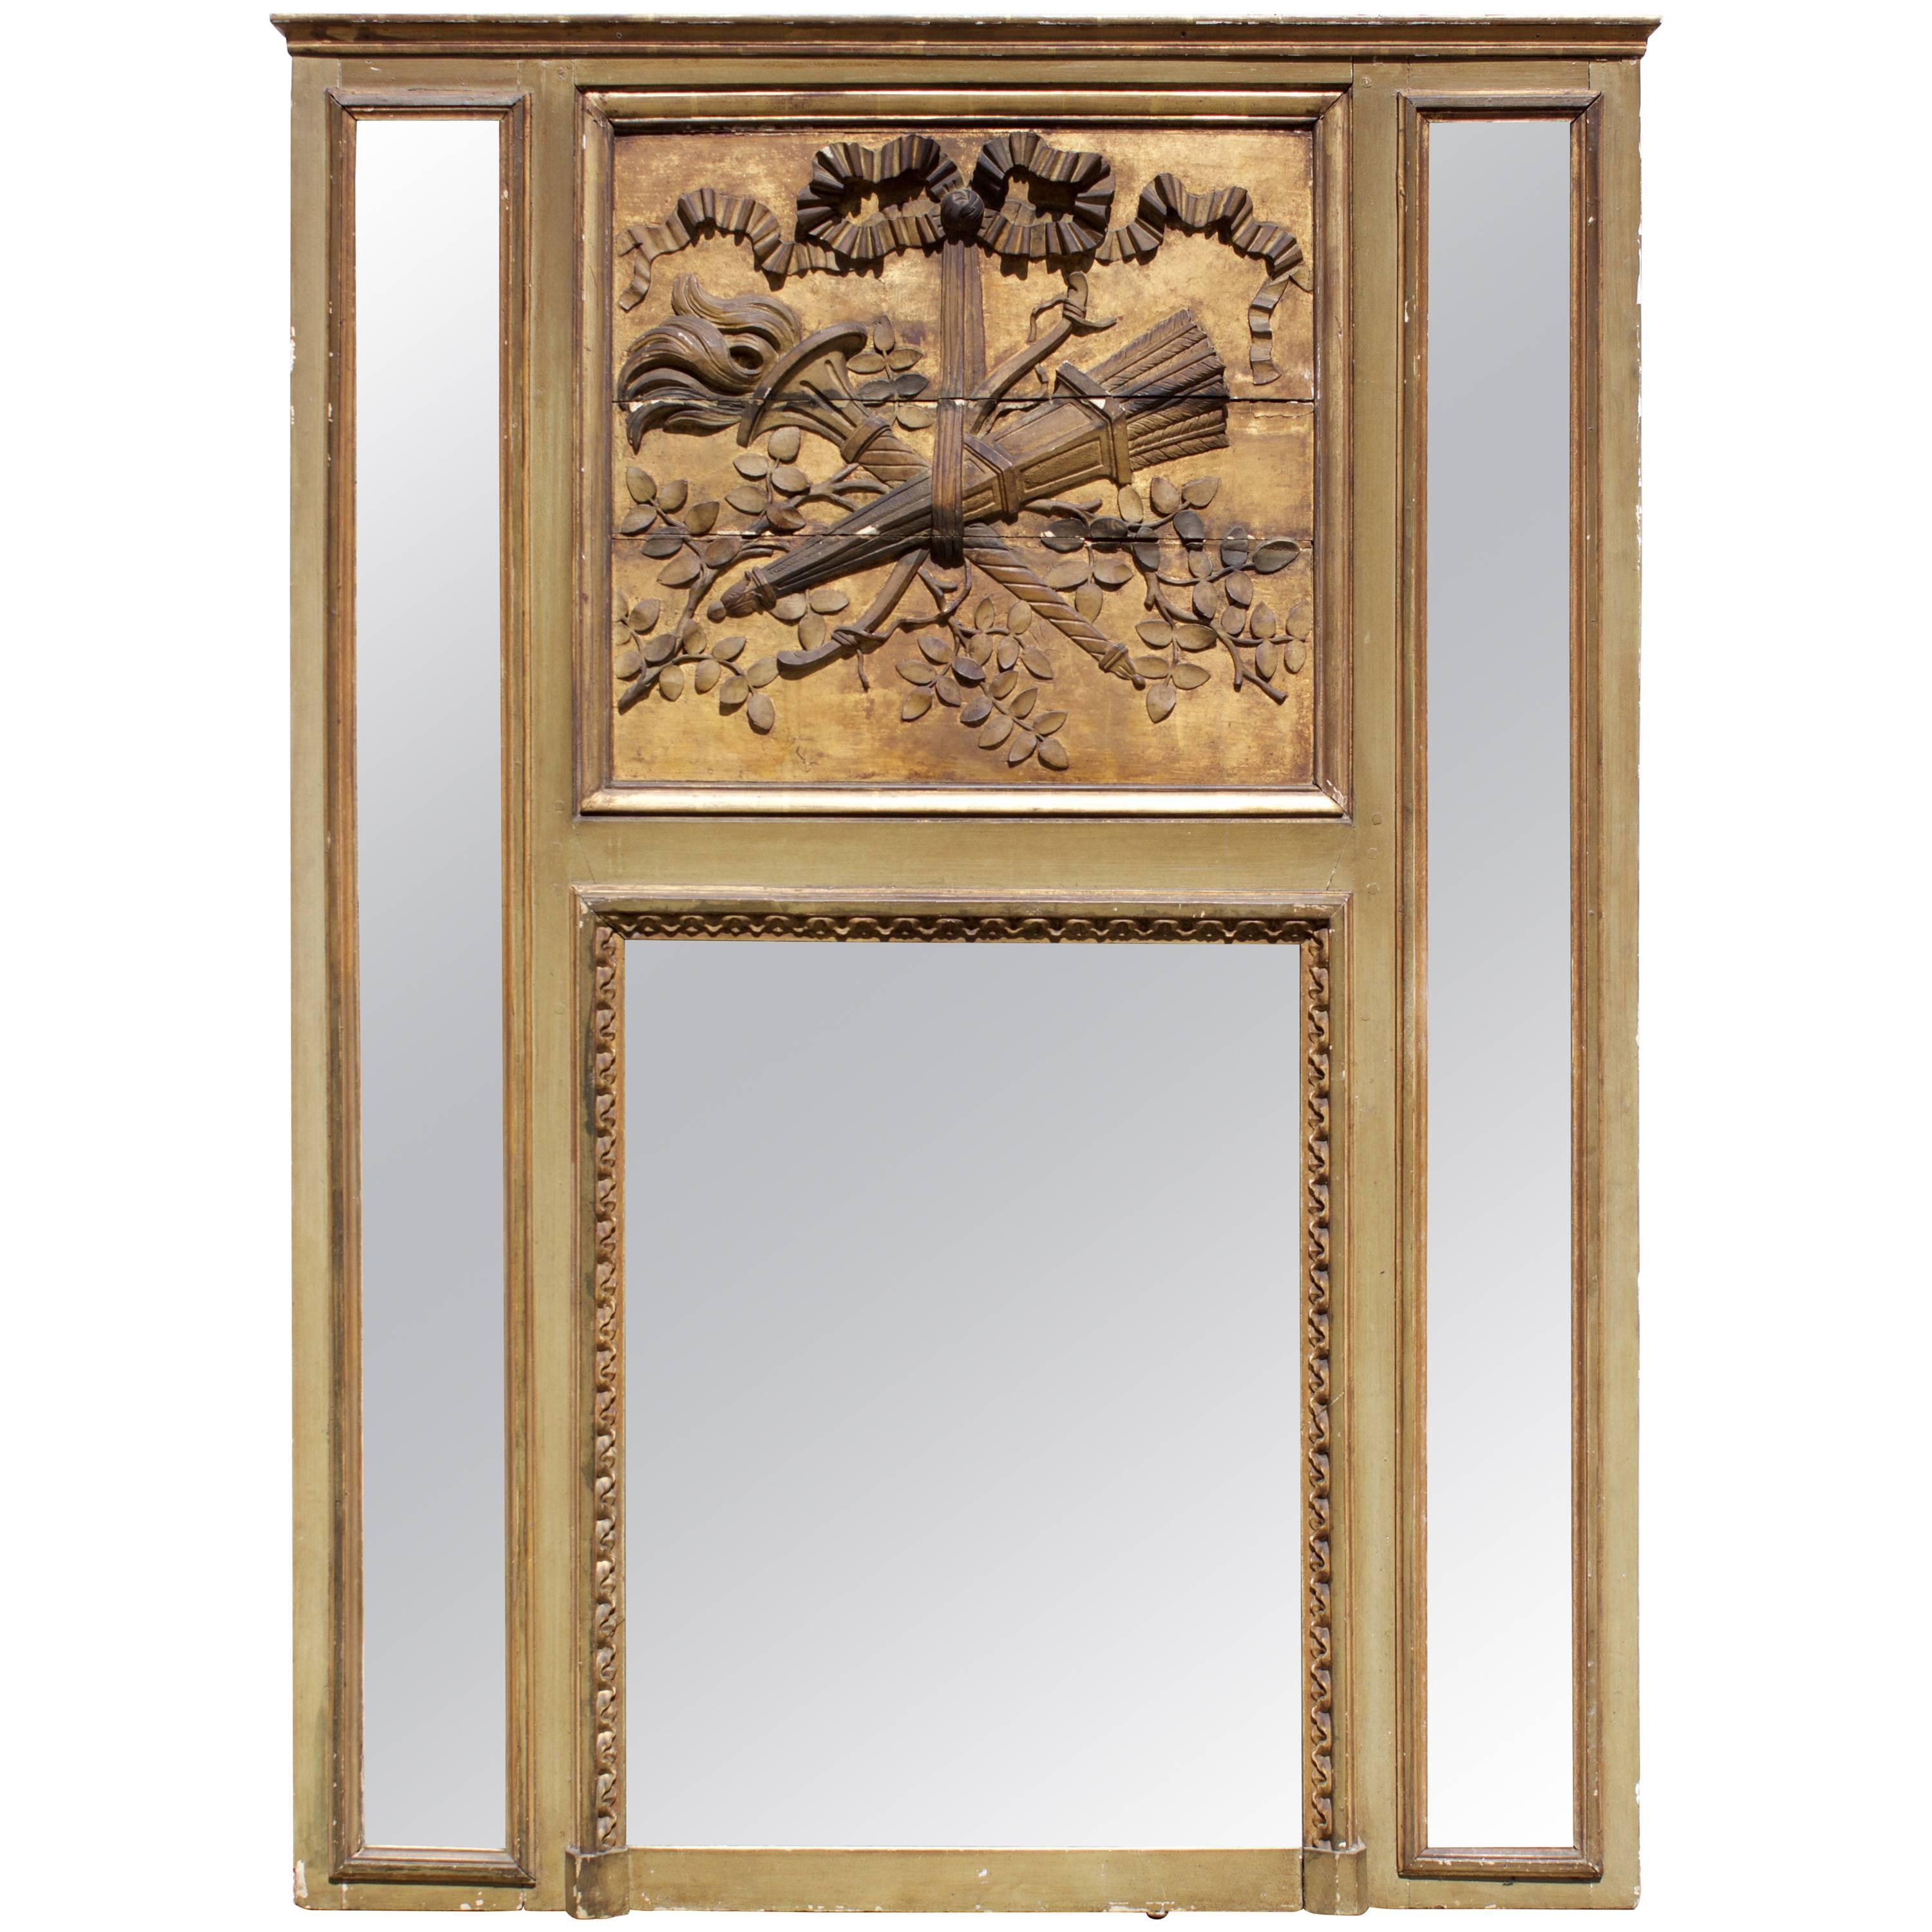 French Louis XVI Period Mantel Trumeau Mirror "A Parecloses" For Sale